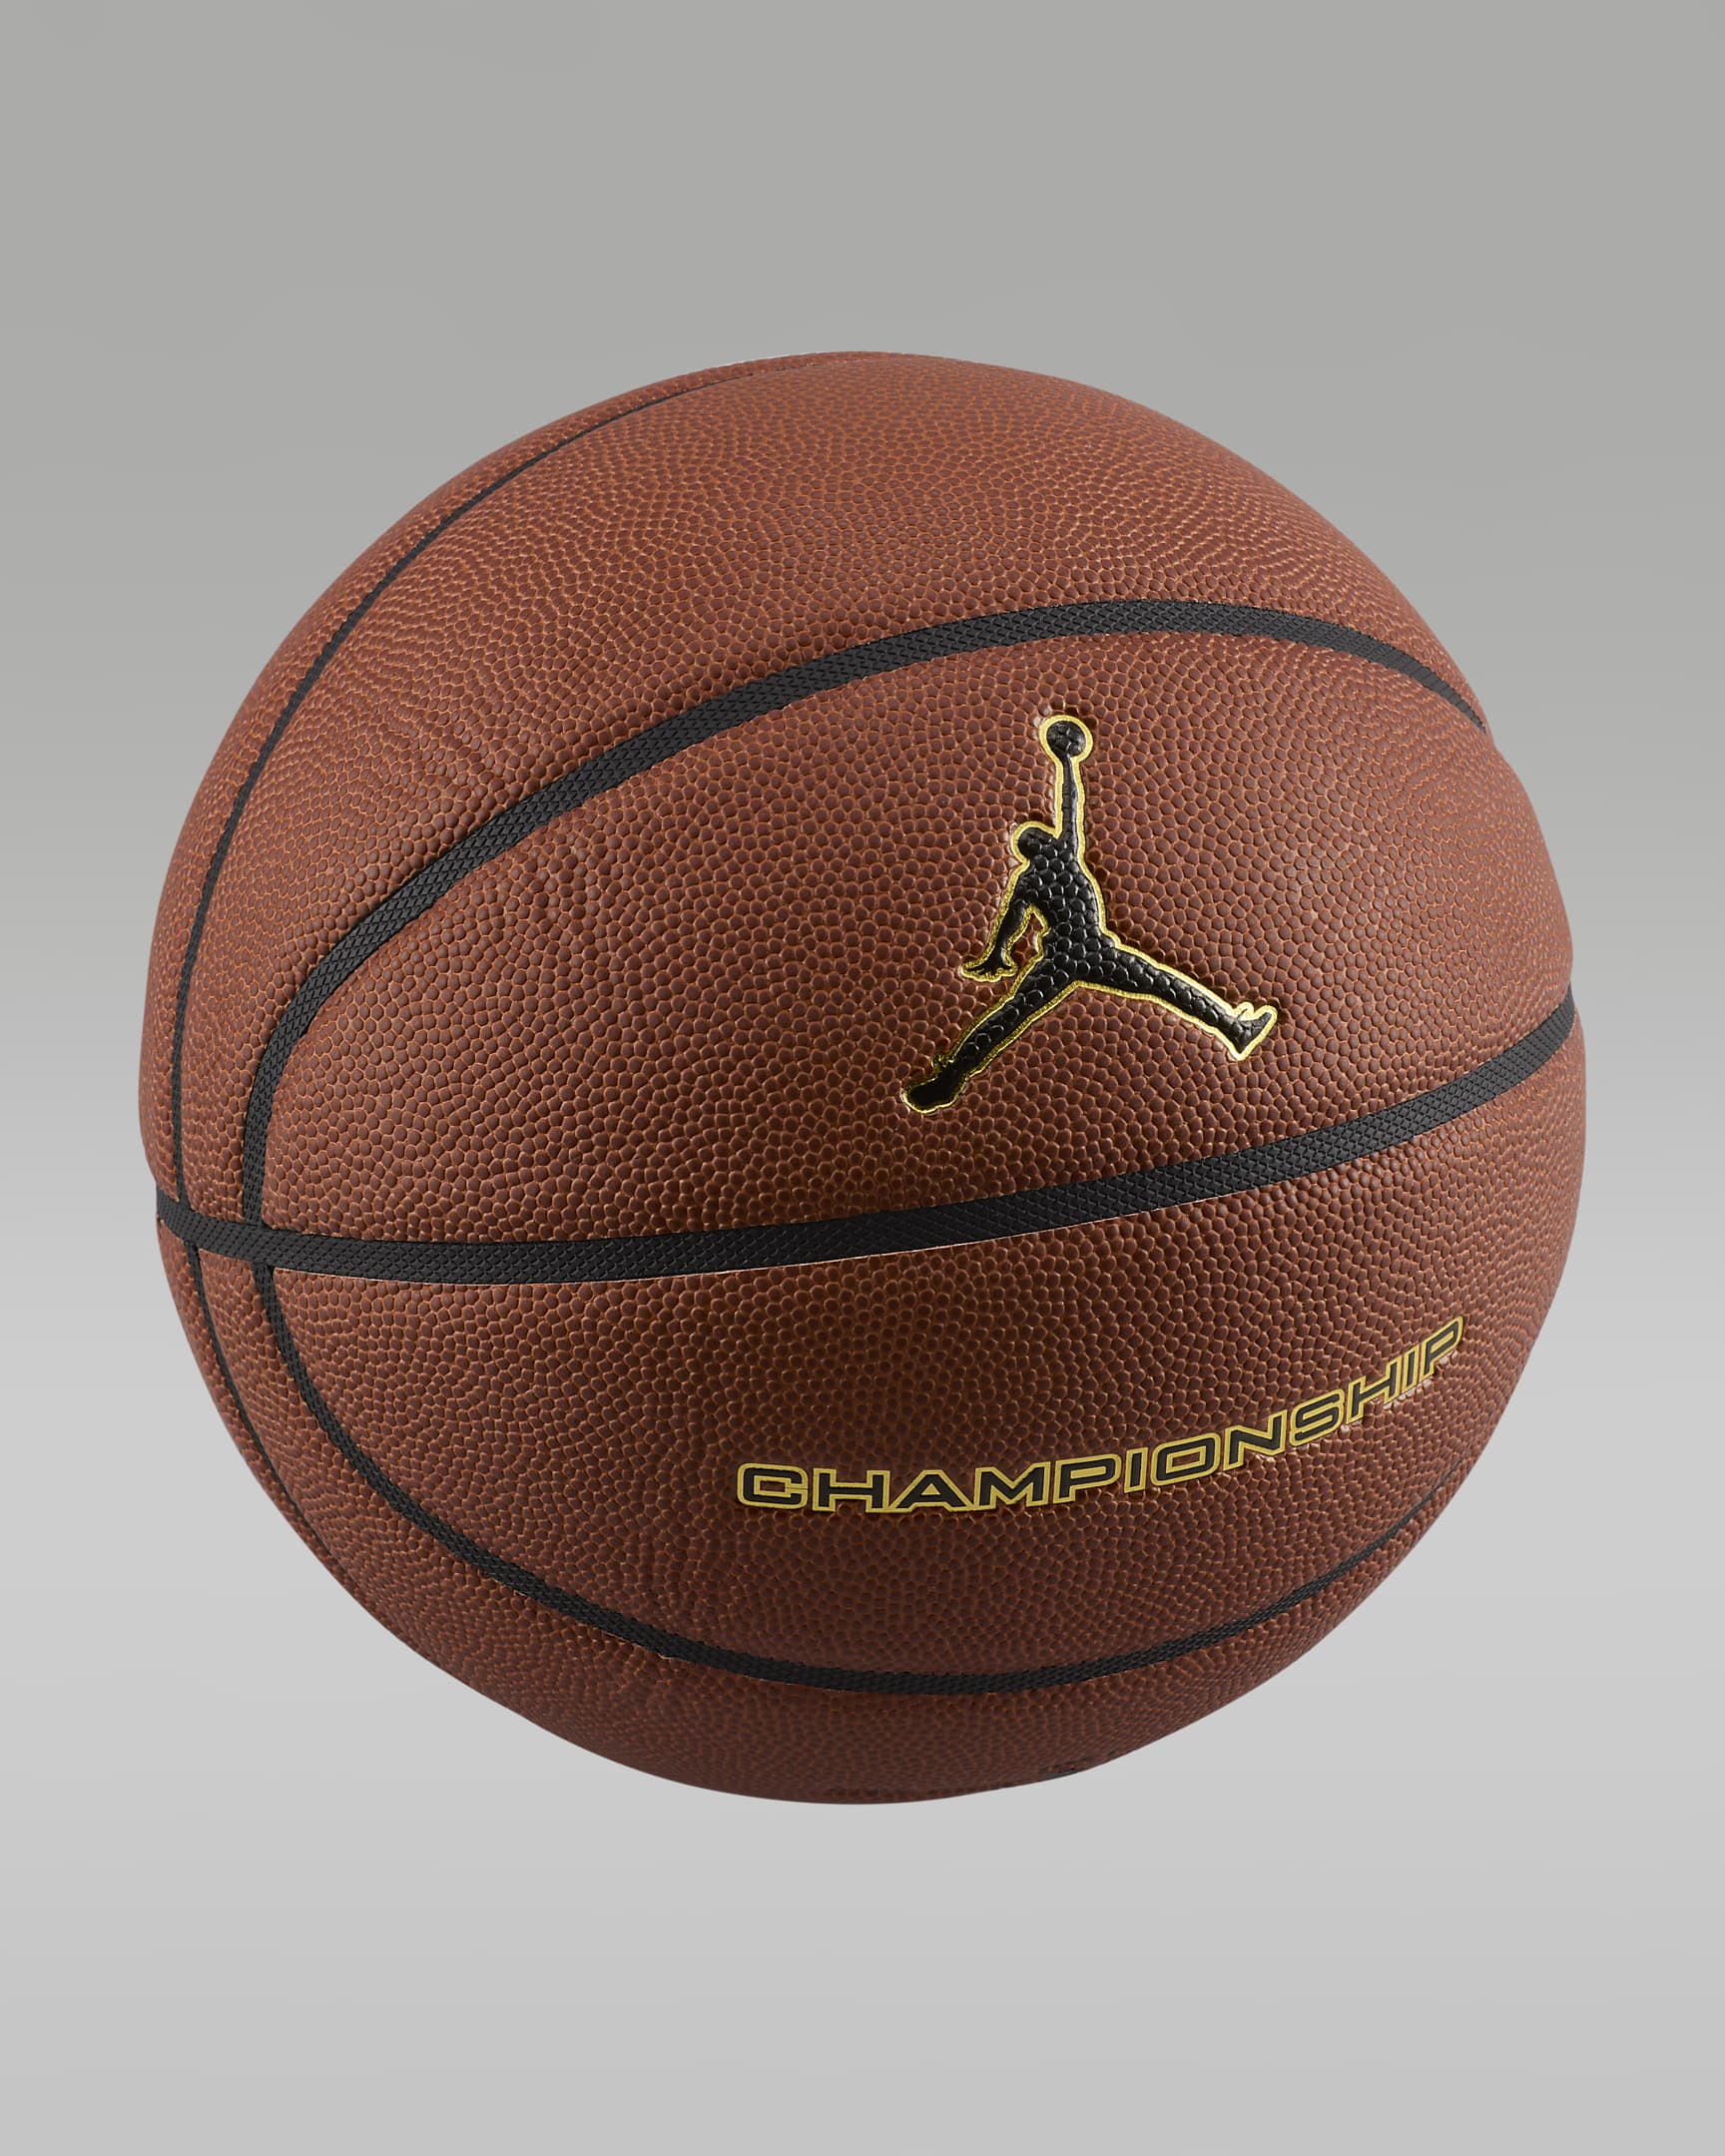 Jordan Basketball (Deflated) - Amber Court/Black/Metallic Gold/Black